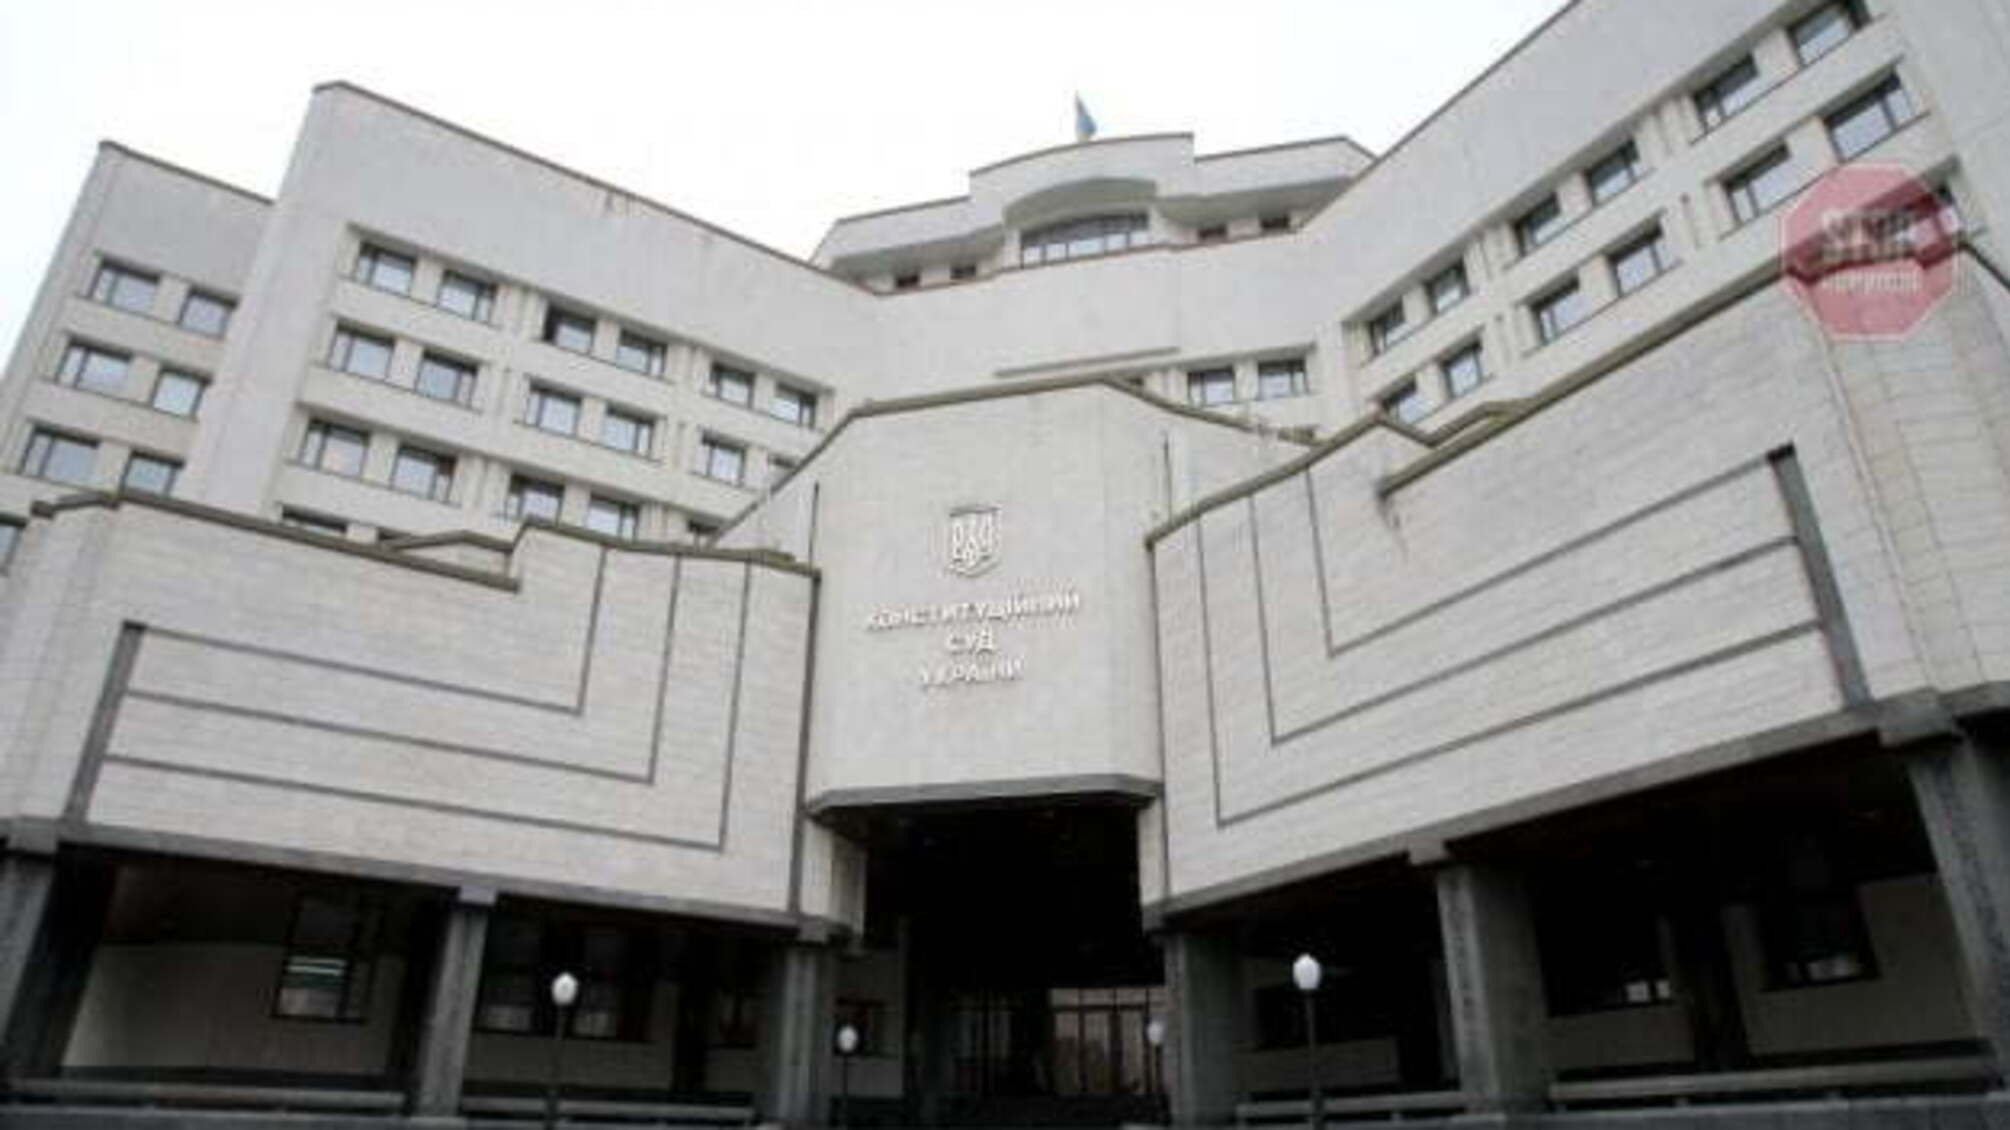 Судьи КСУ заблокировали суд и шантажом требовали участие Тупицкого